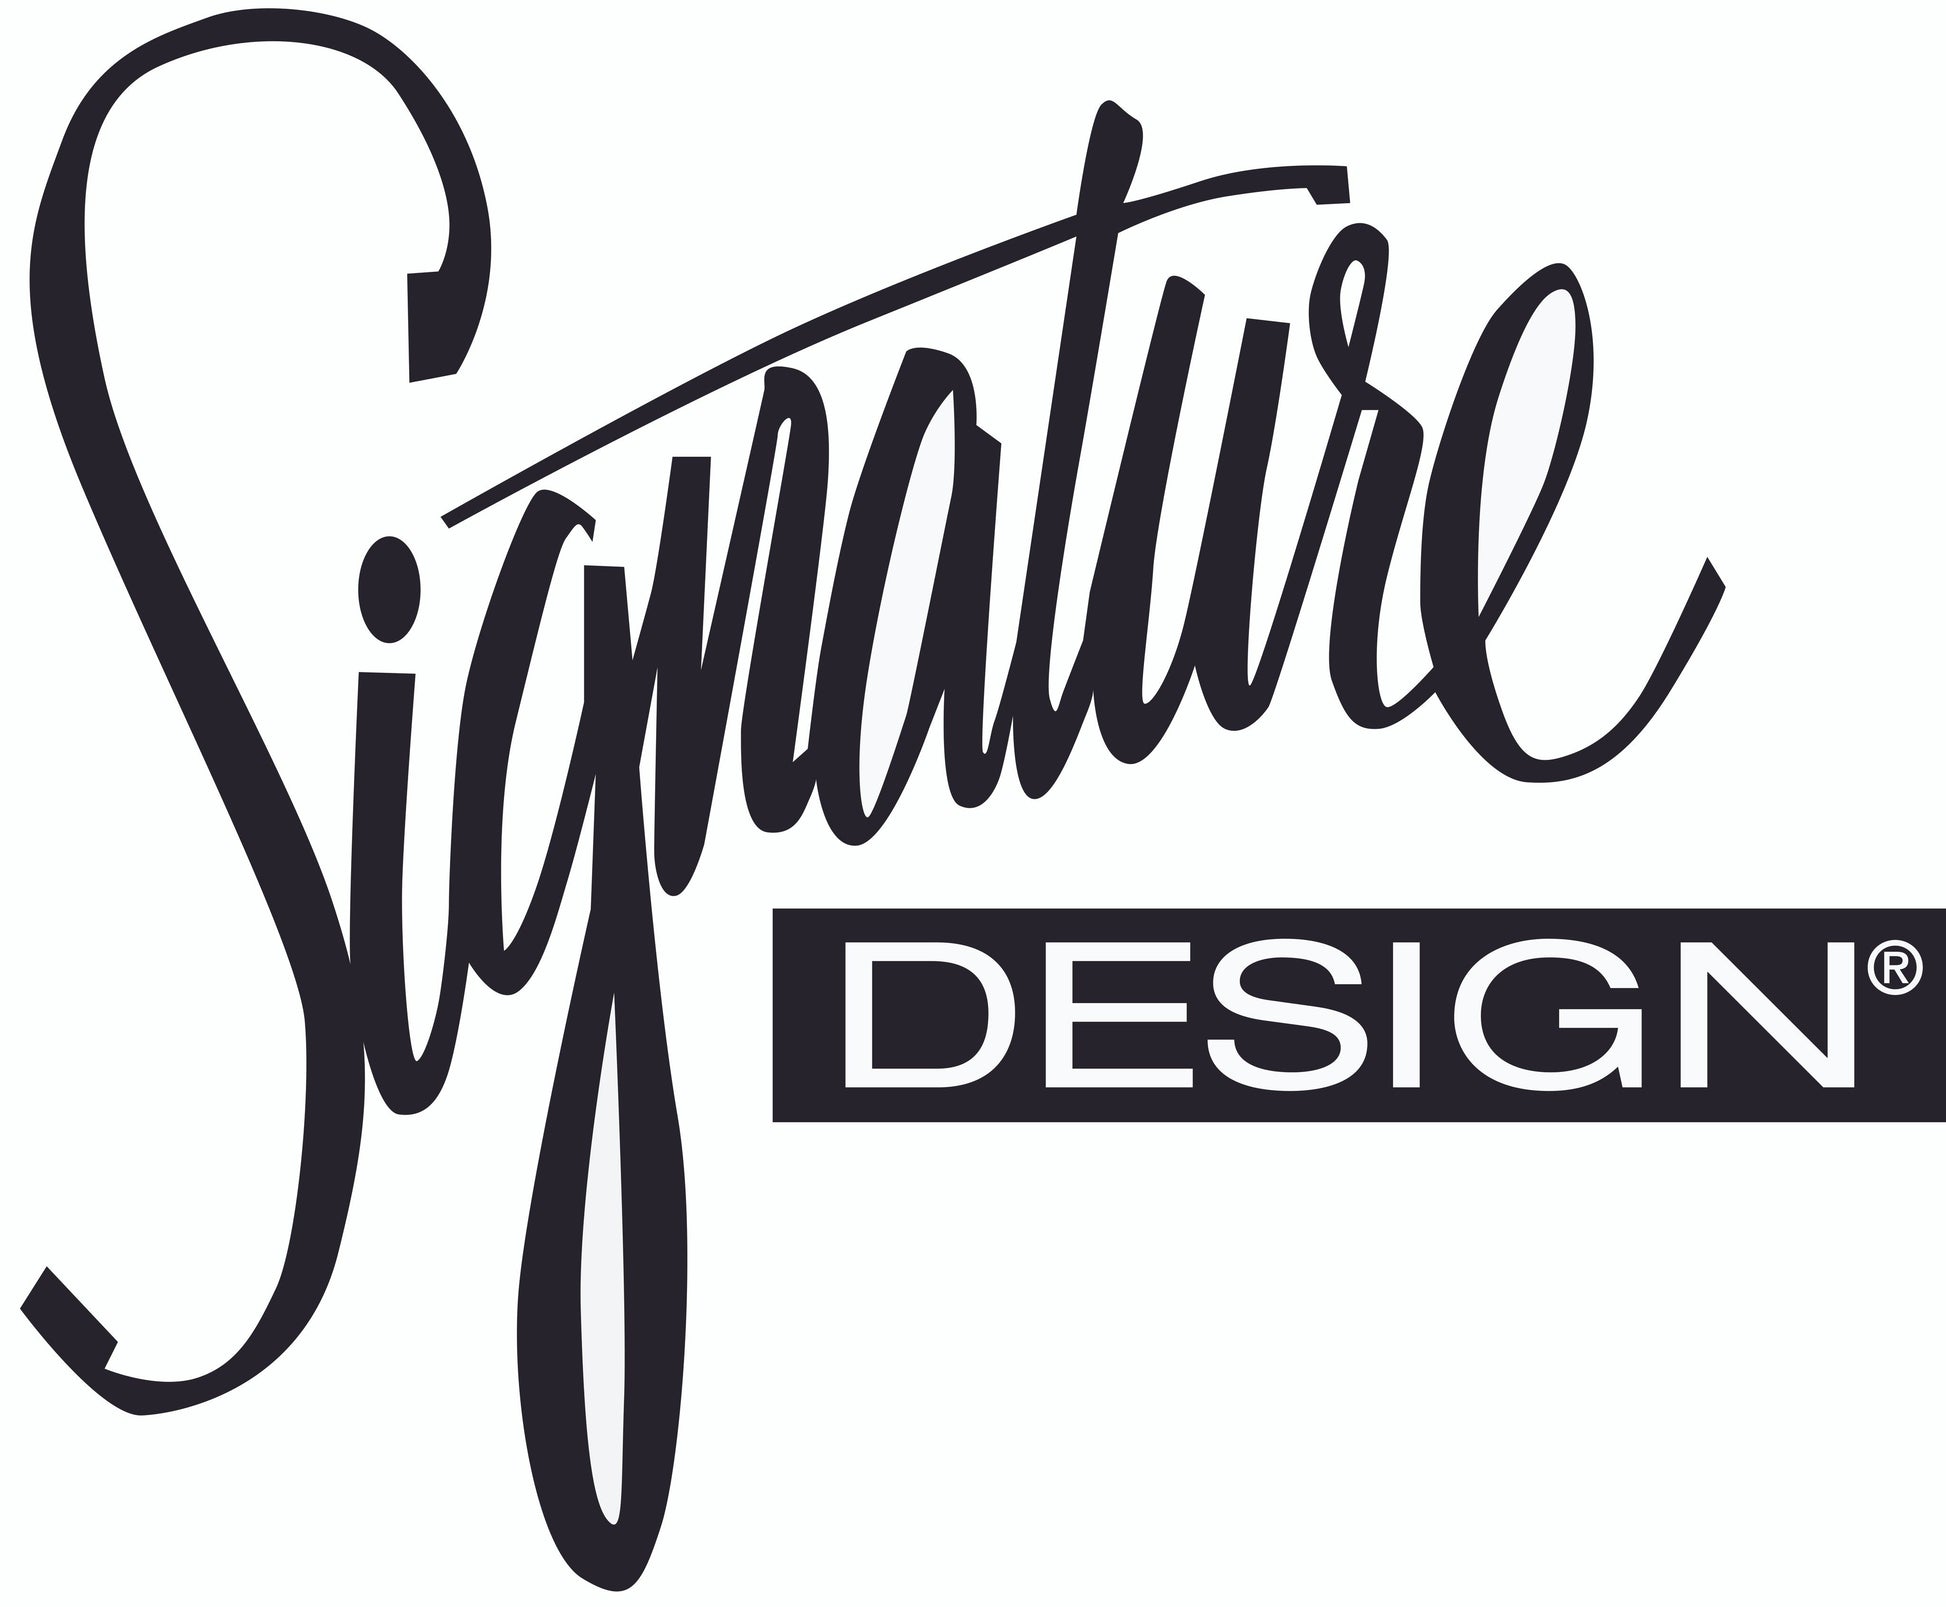 Dorrinson L-Desk with Storage Signature Design by Ashley®